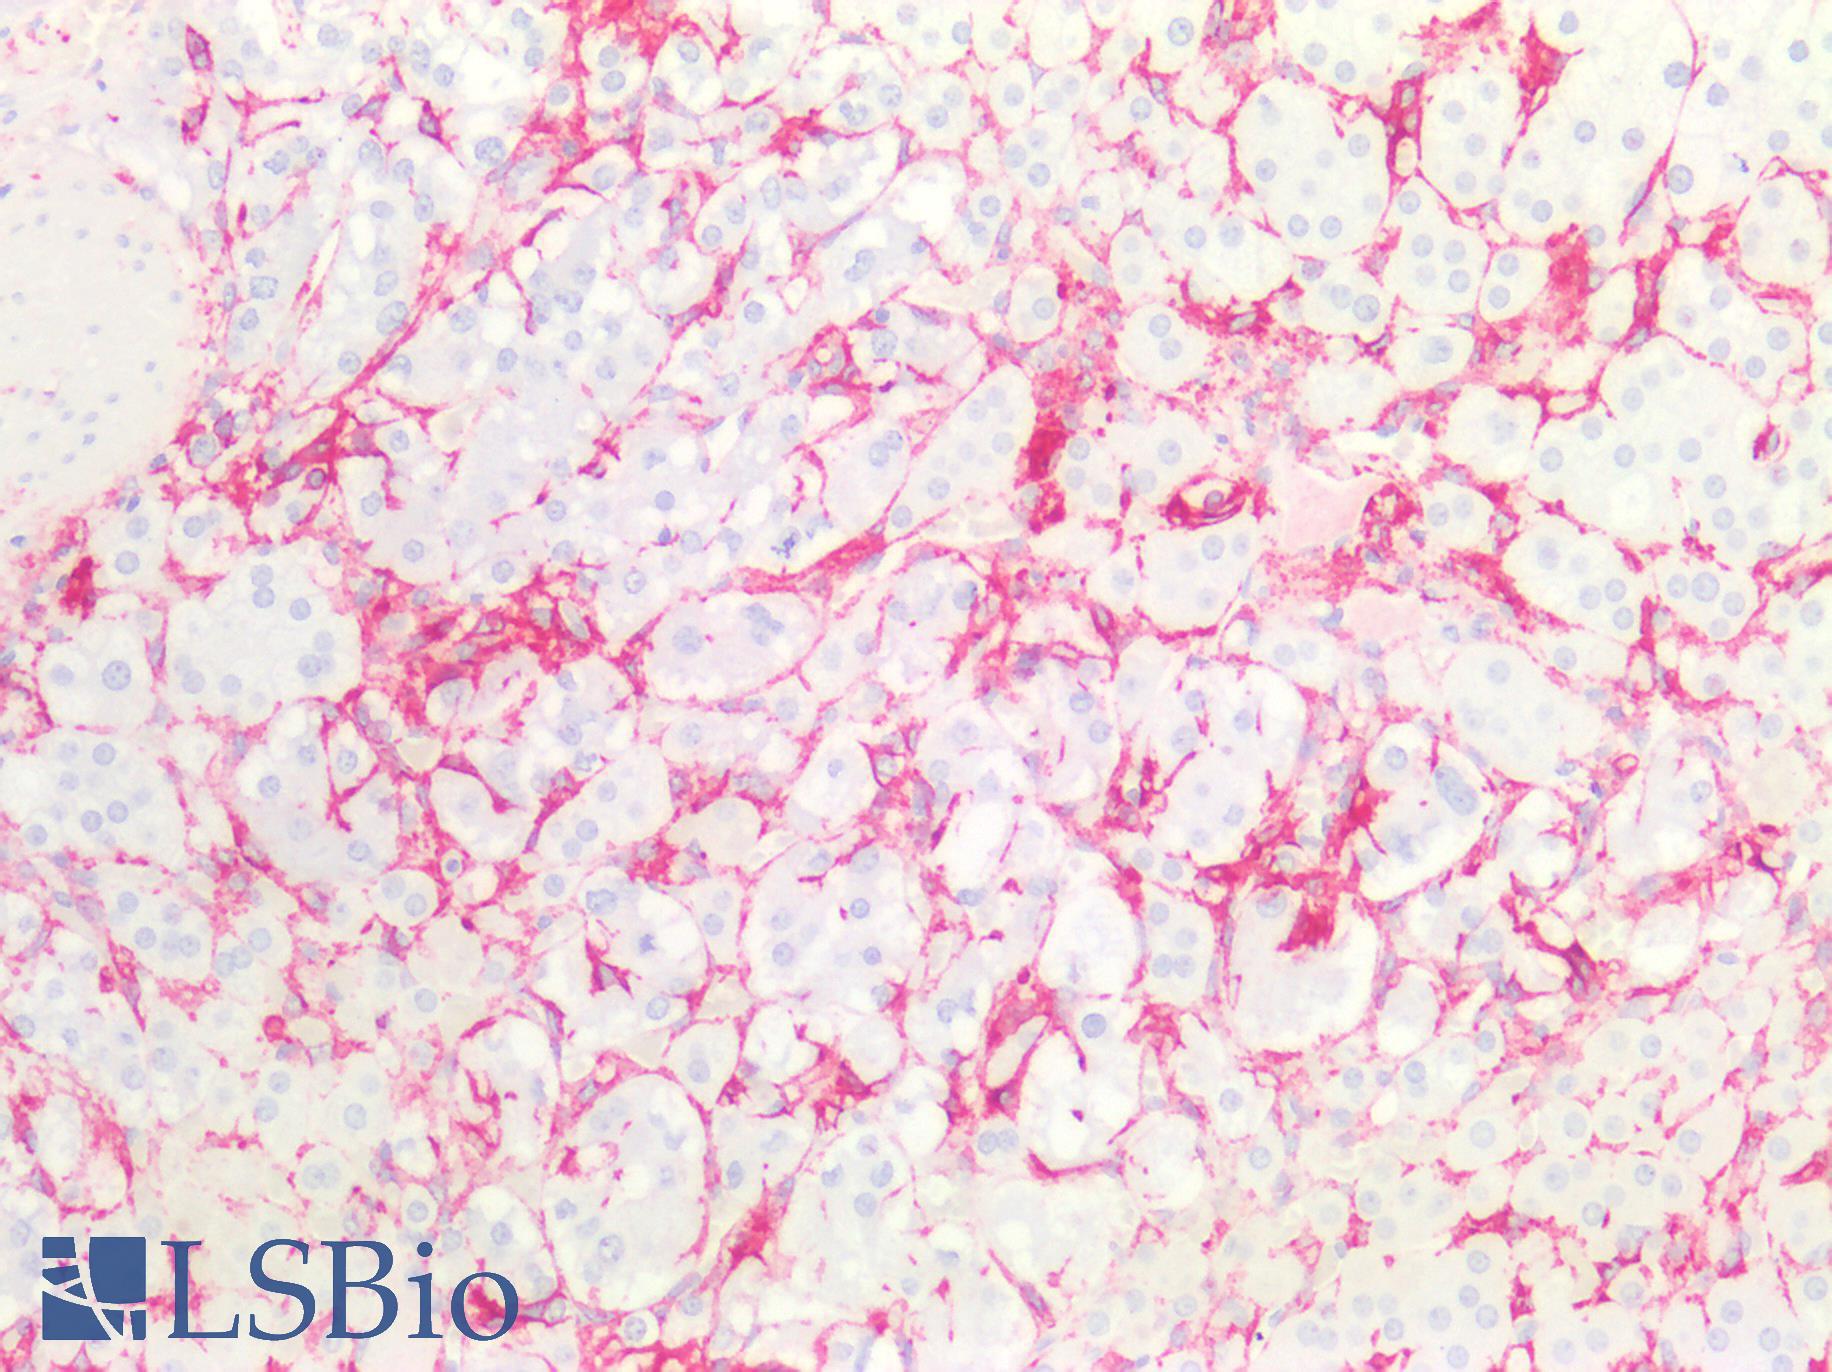 NGFR / CD271 / TNR16 Antibody - Human Adrenal: Formalin-Fixed, Paraffin-Embedded (FFPE)